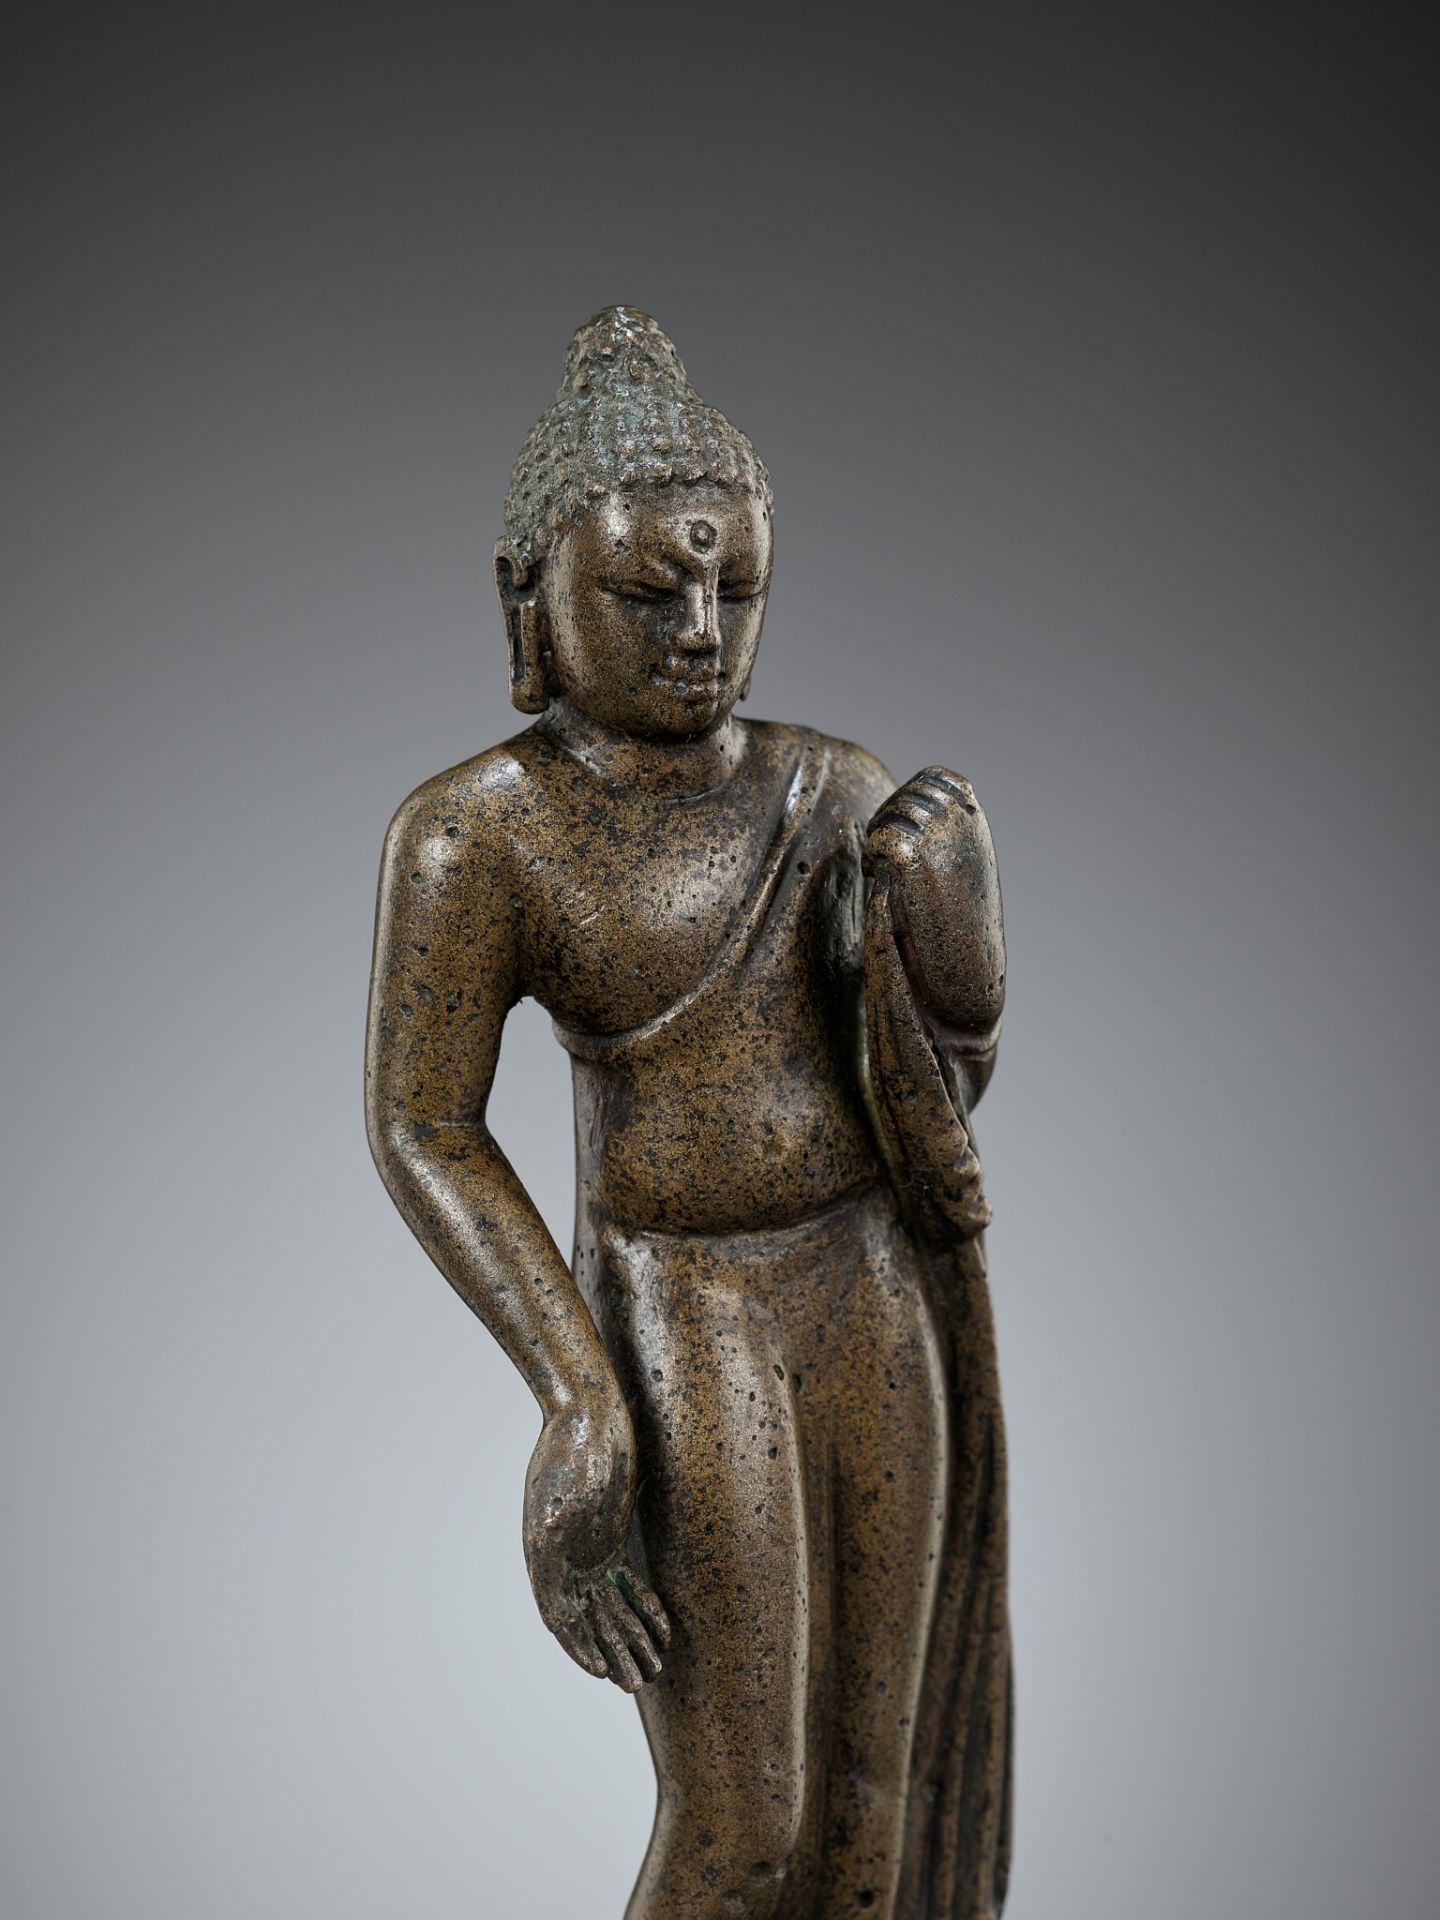 A BRONZE FIGURE OF A STANDING BUDDHA, POST-GUPTA PERIOD, INDIA, C. 7TH CENTURY - Image 14 of 15